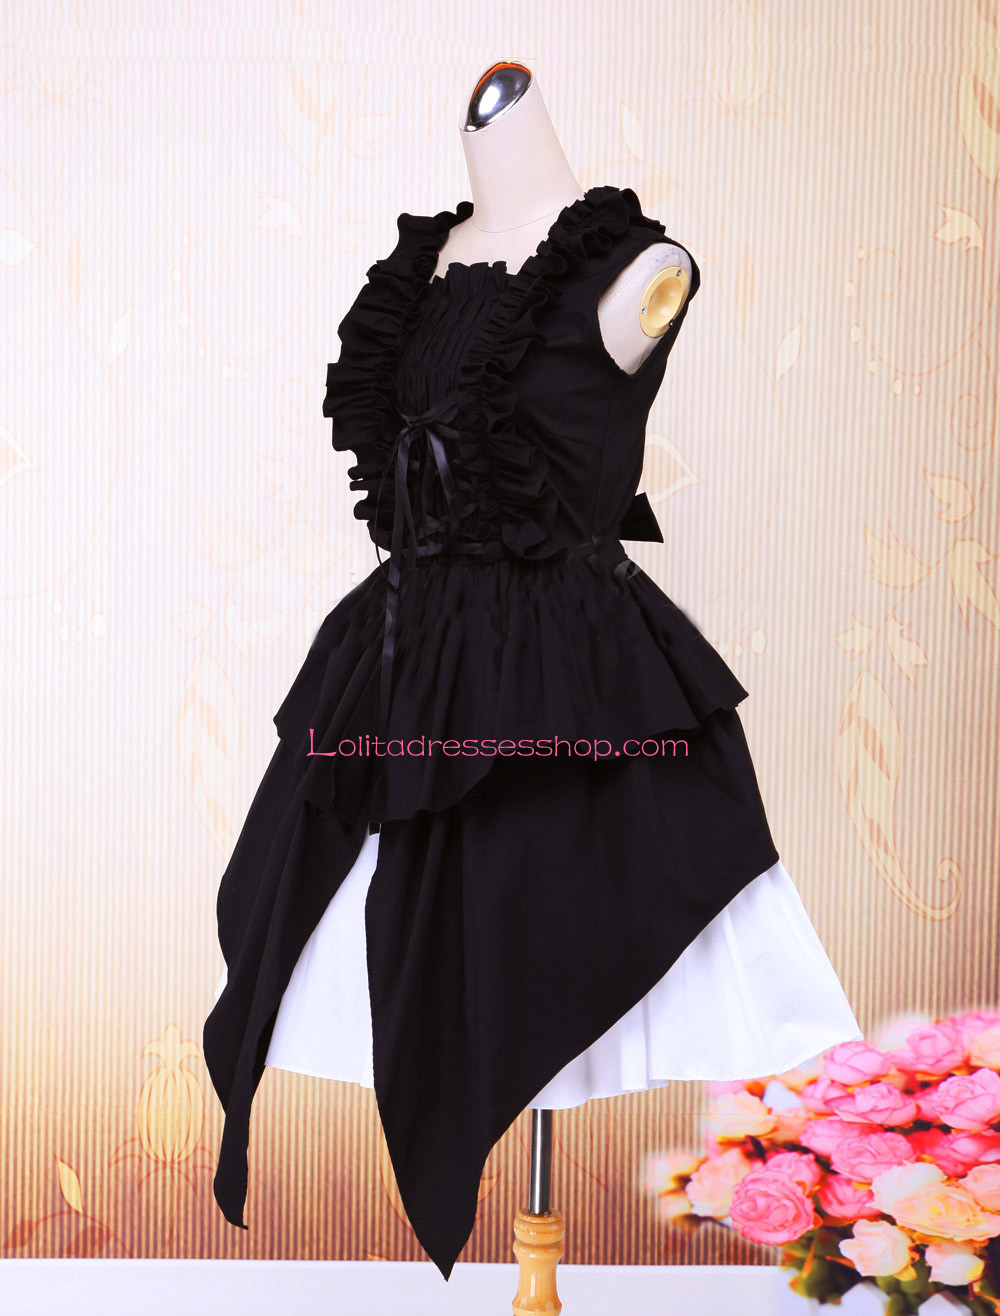 Black and White Cotton Round Neck Sleeveless Splicing Gothic Lolita Dress